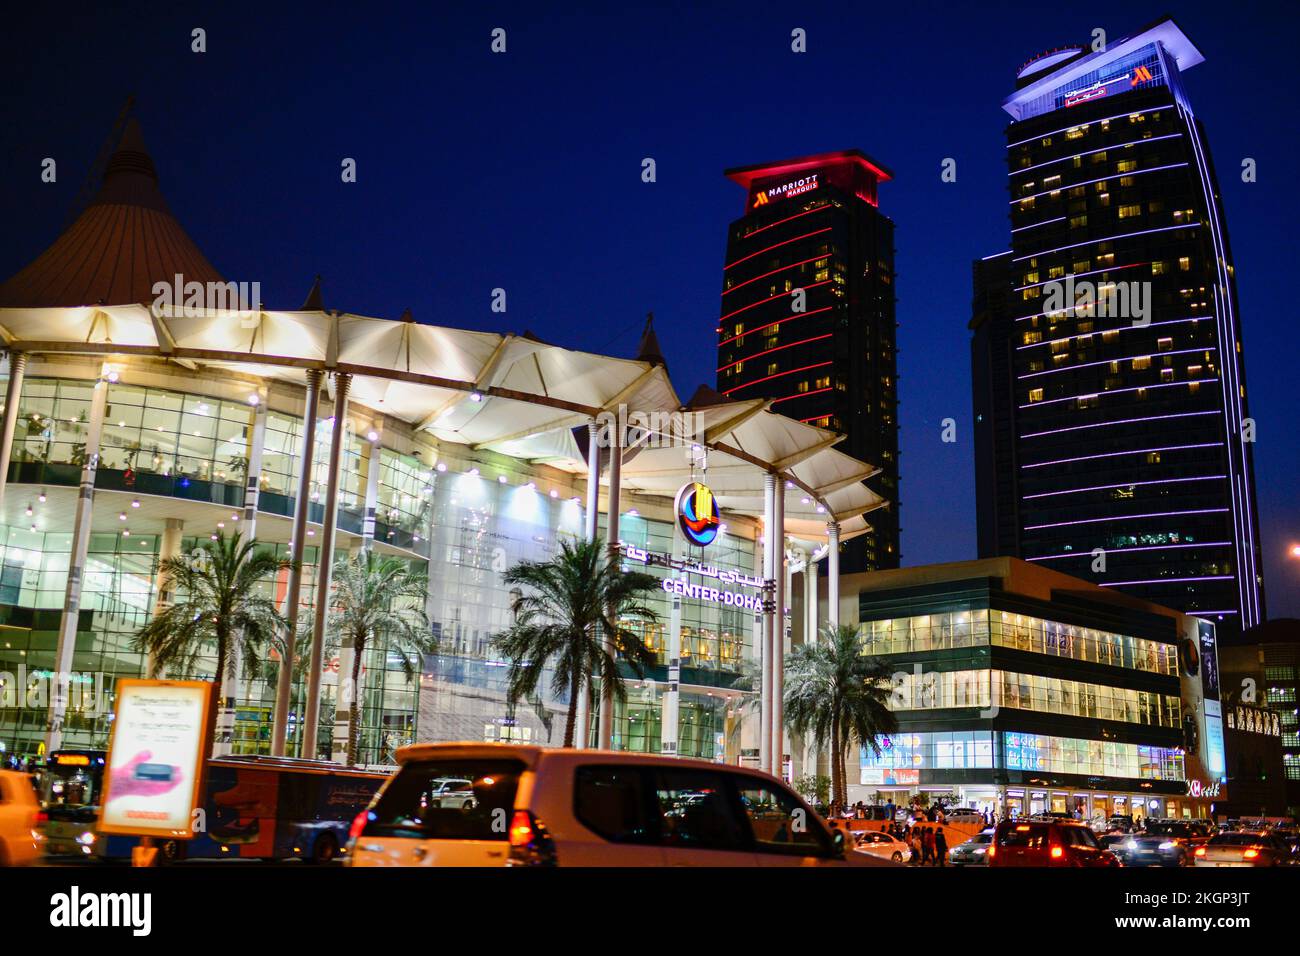 QATAR, Doha, gratte-ciel de la baie est, flou / KATAR, Doha, Wolkenkratzer der Eastbay, verwischt, Centre Doha, Marriott Hotel Marquis Banque D'Images